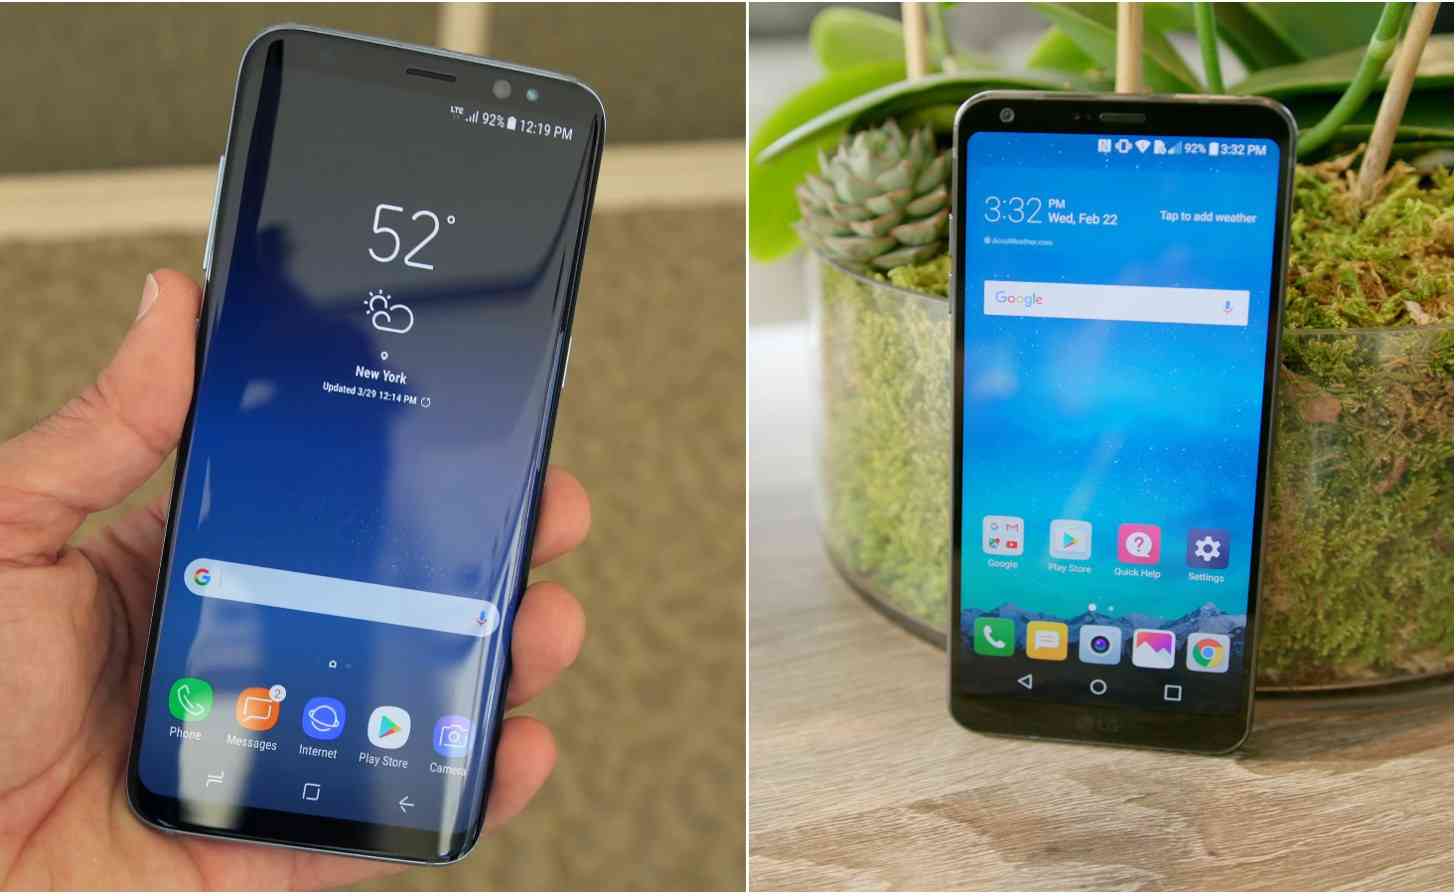 Samsung Galaxy S8 and LG G6